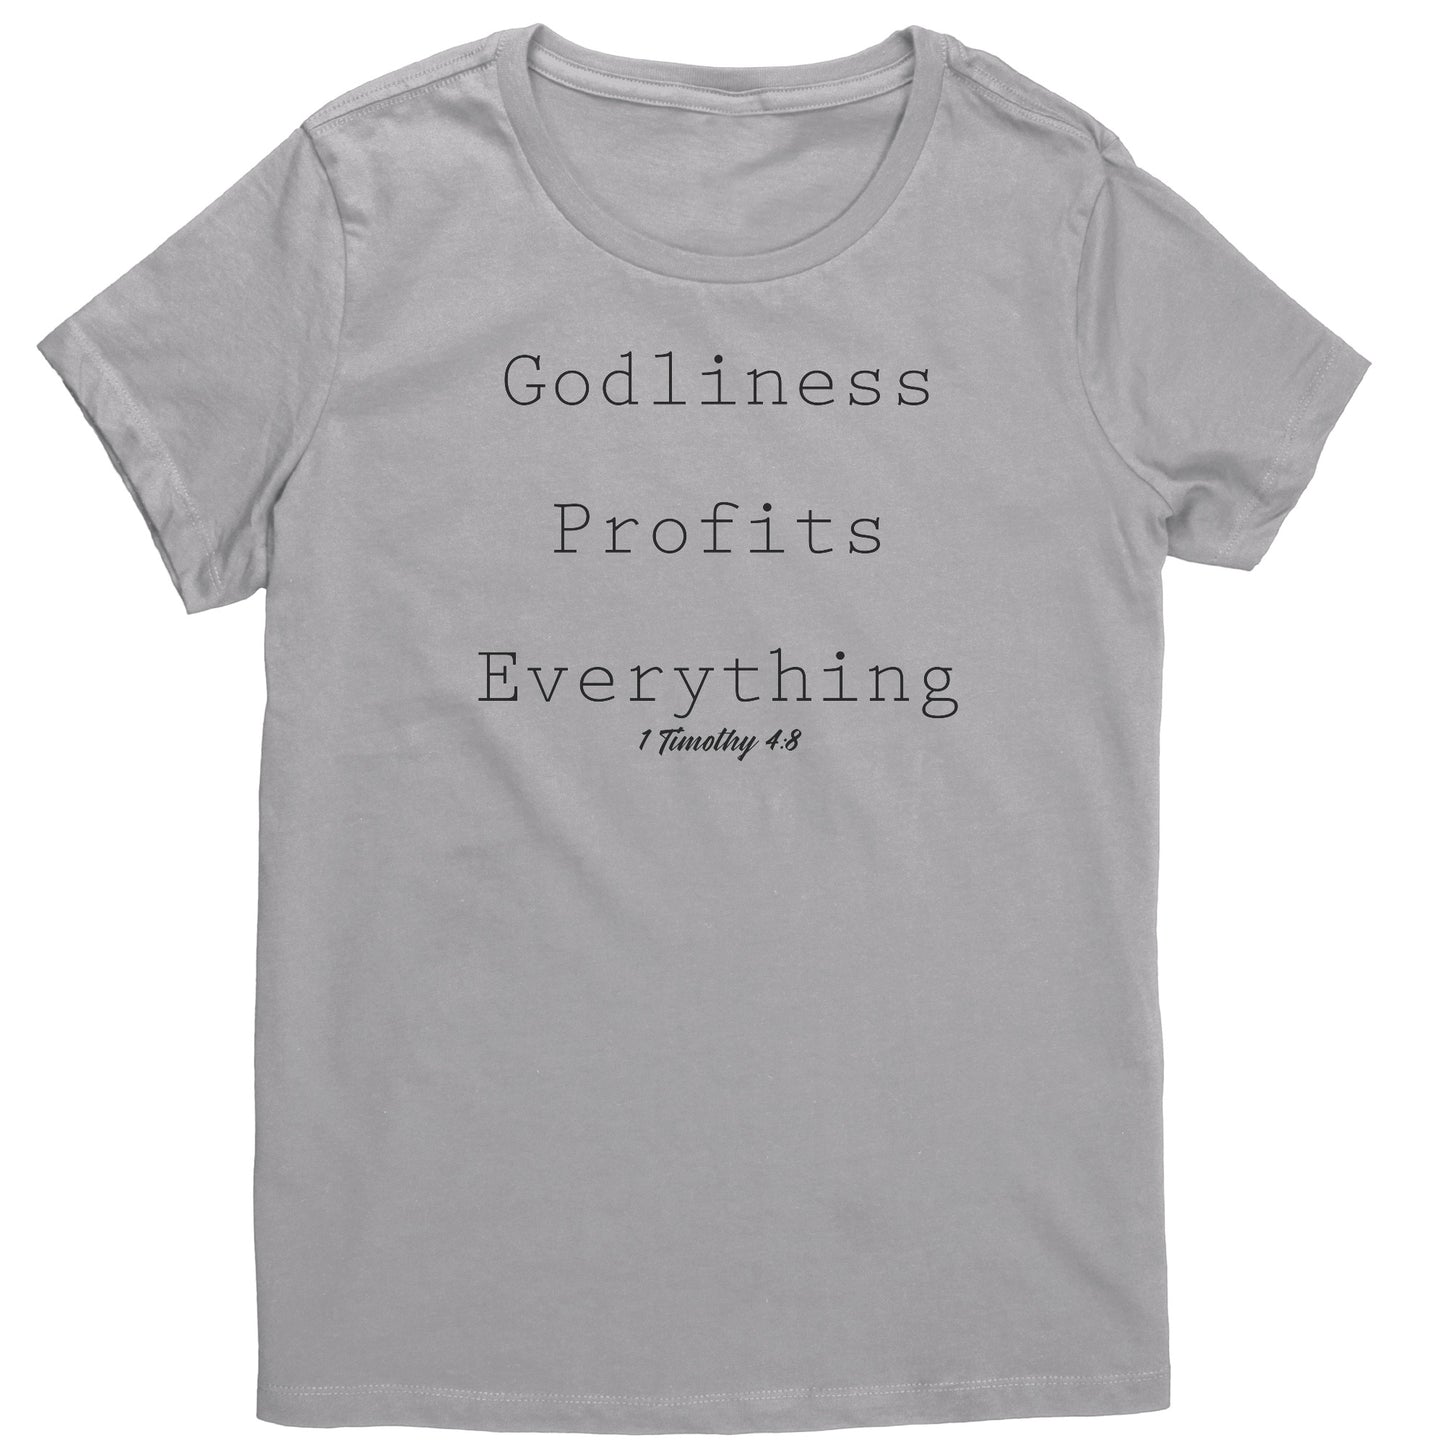 Godliness Profits Everything 1 Timothy 4:8 Women's T-Shirt Part 1